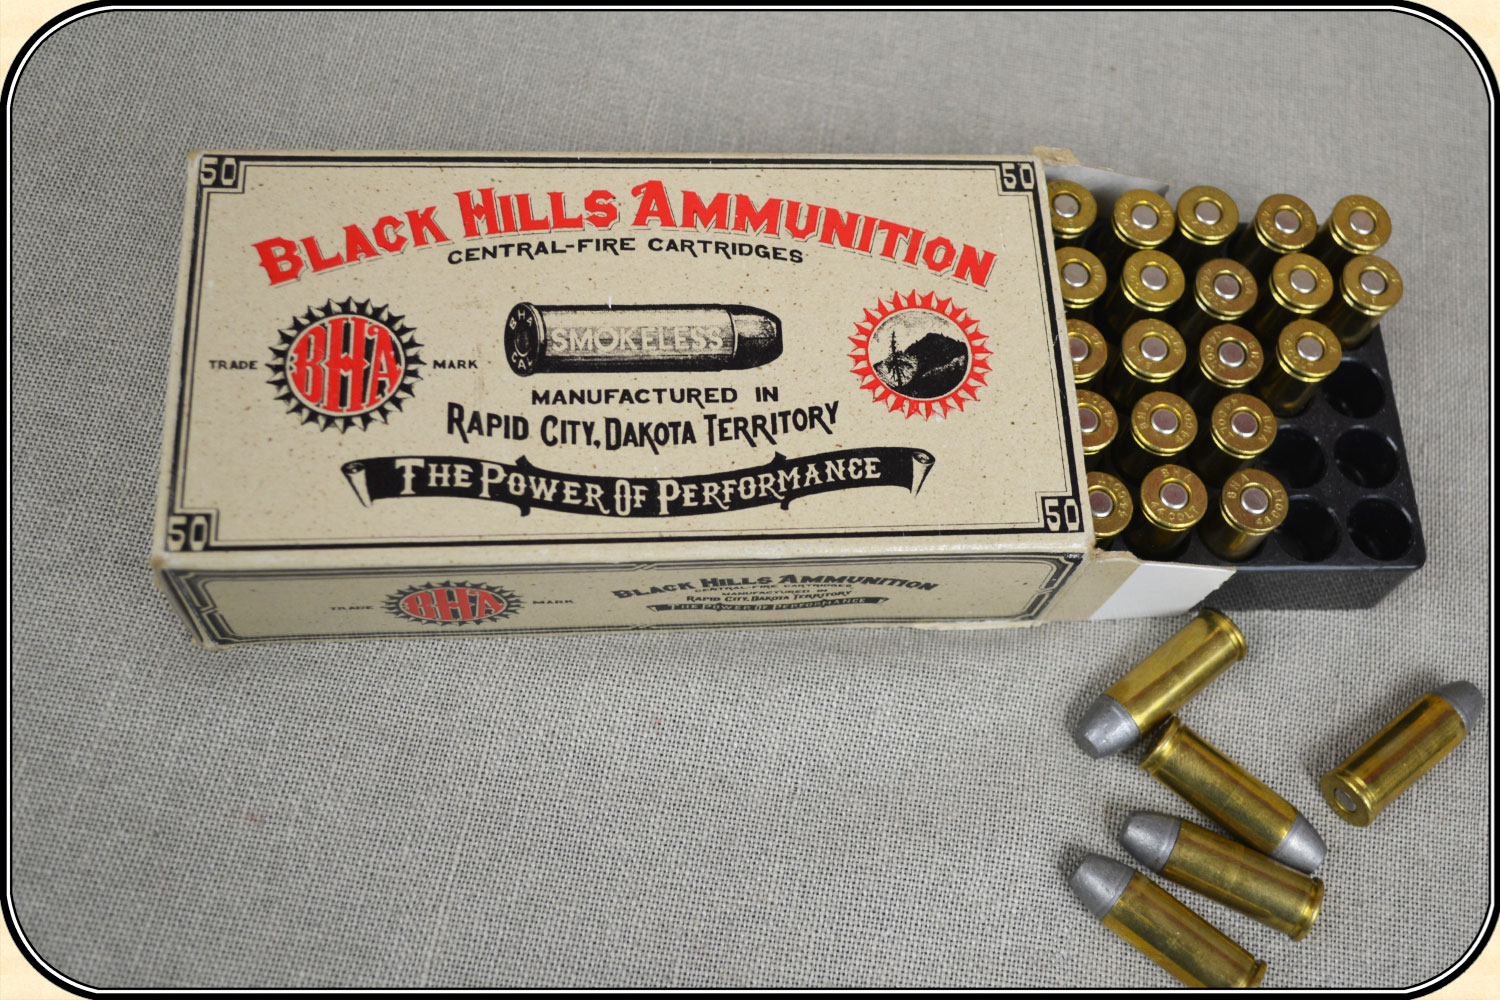 17-facts-about-black-hills-ammunition